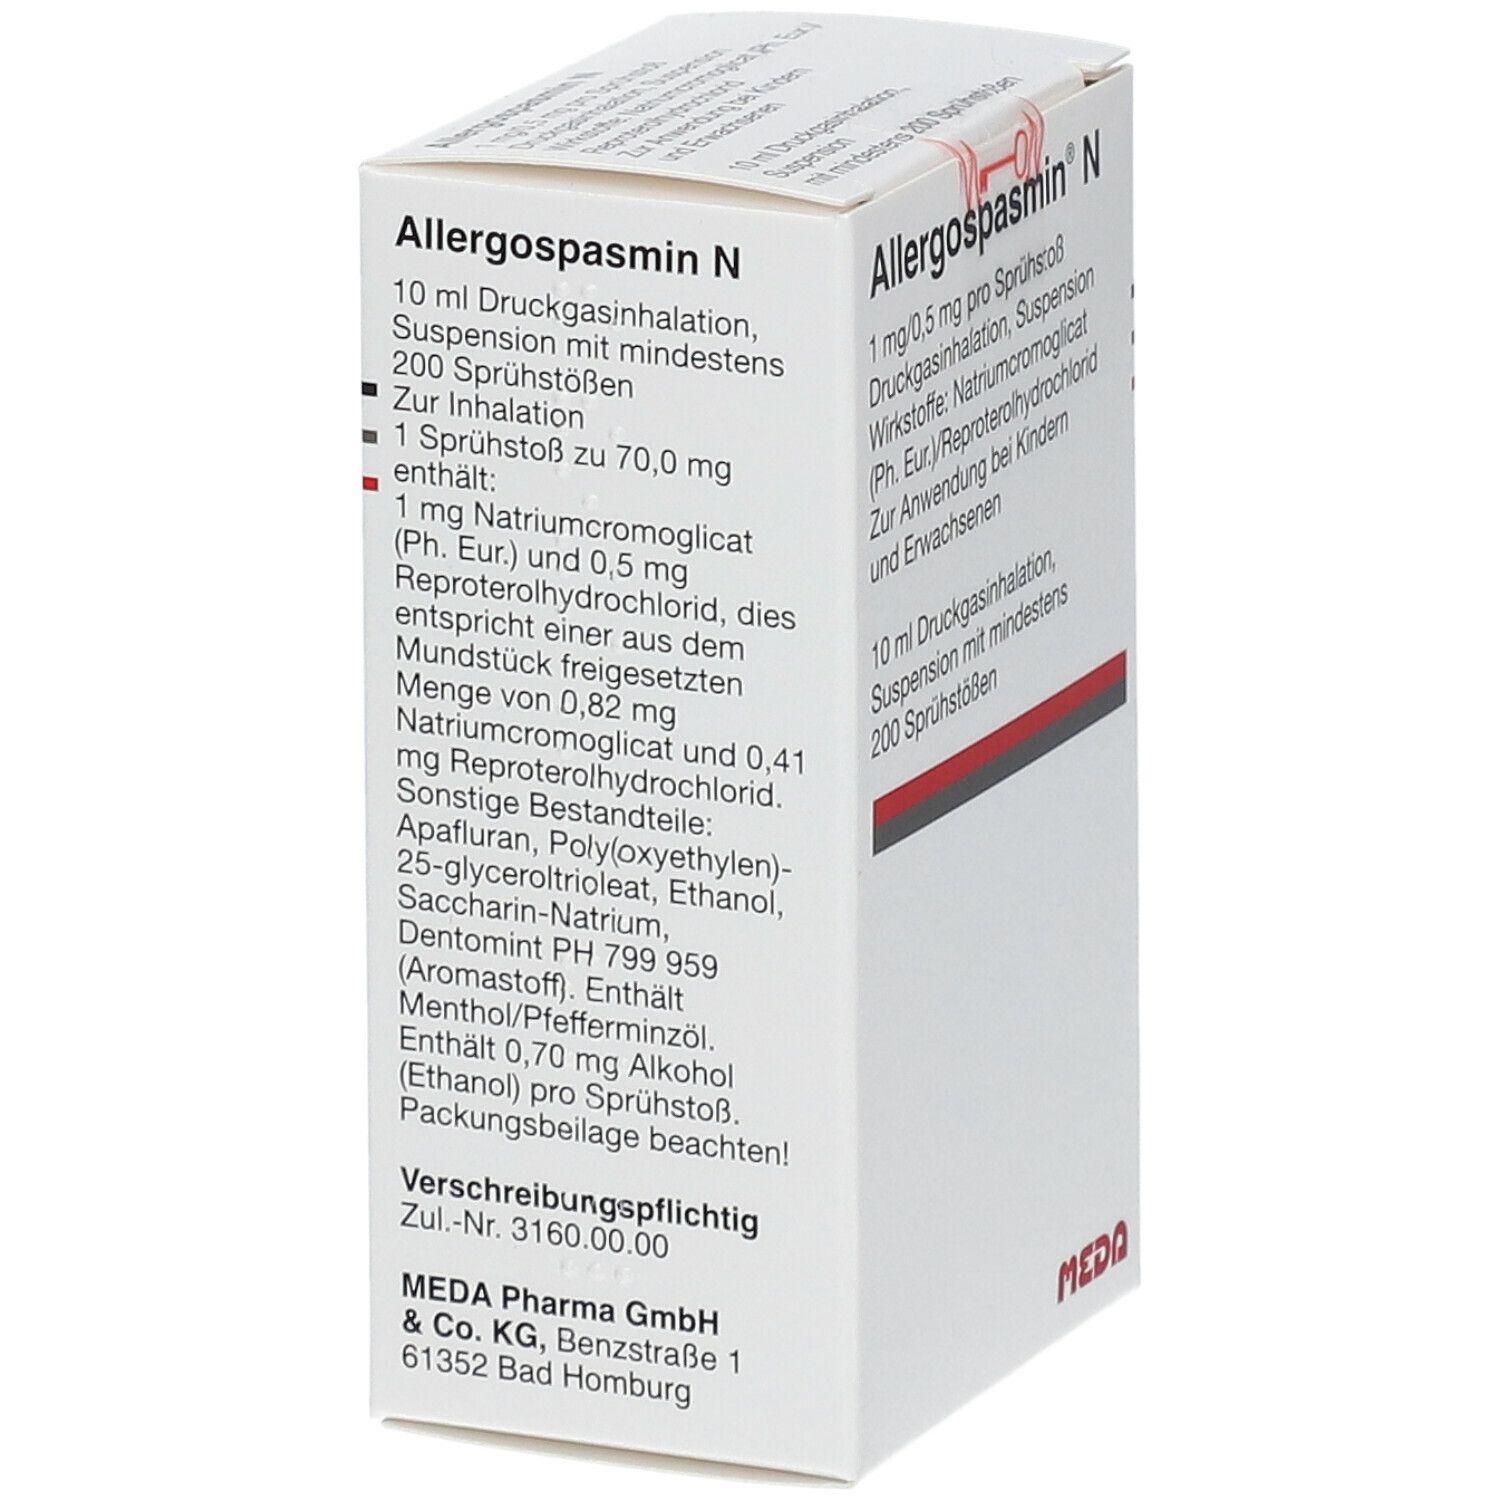 Allergospasmin® N 1 mg/0,5 mg pro Sprühstoß